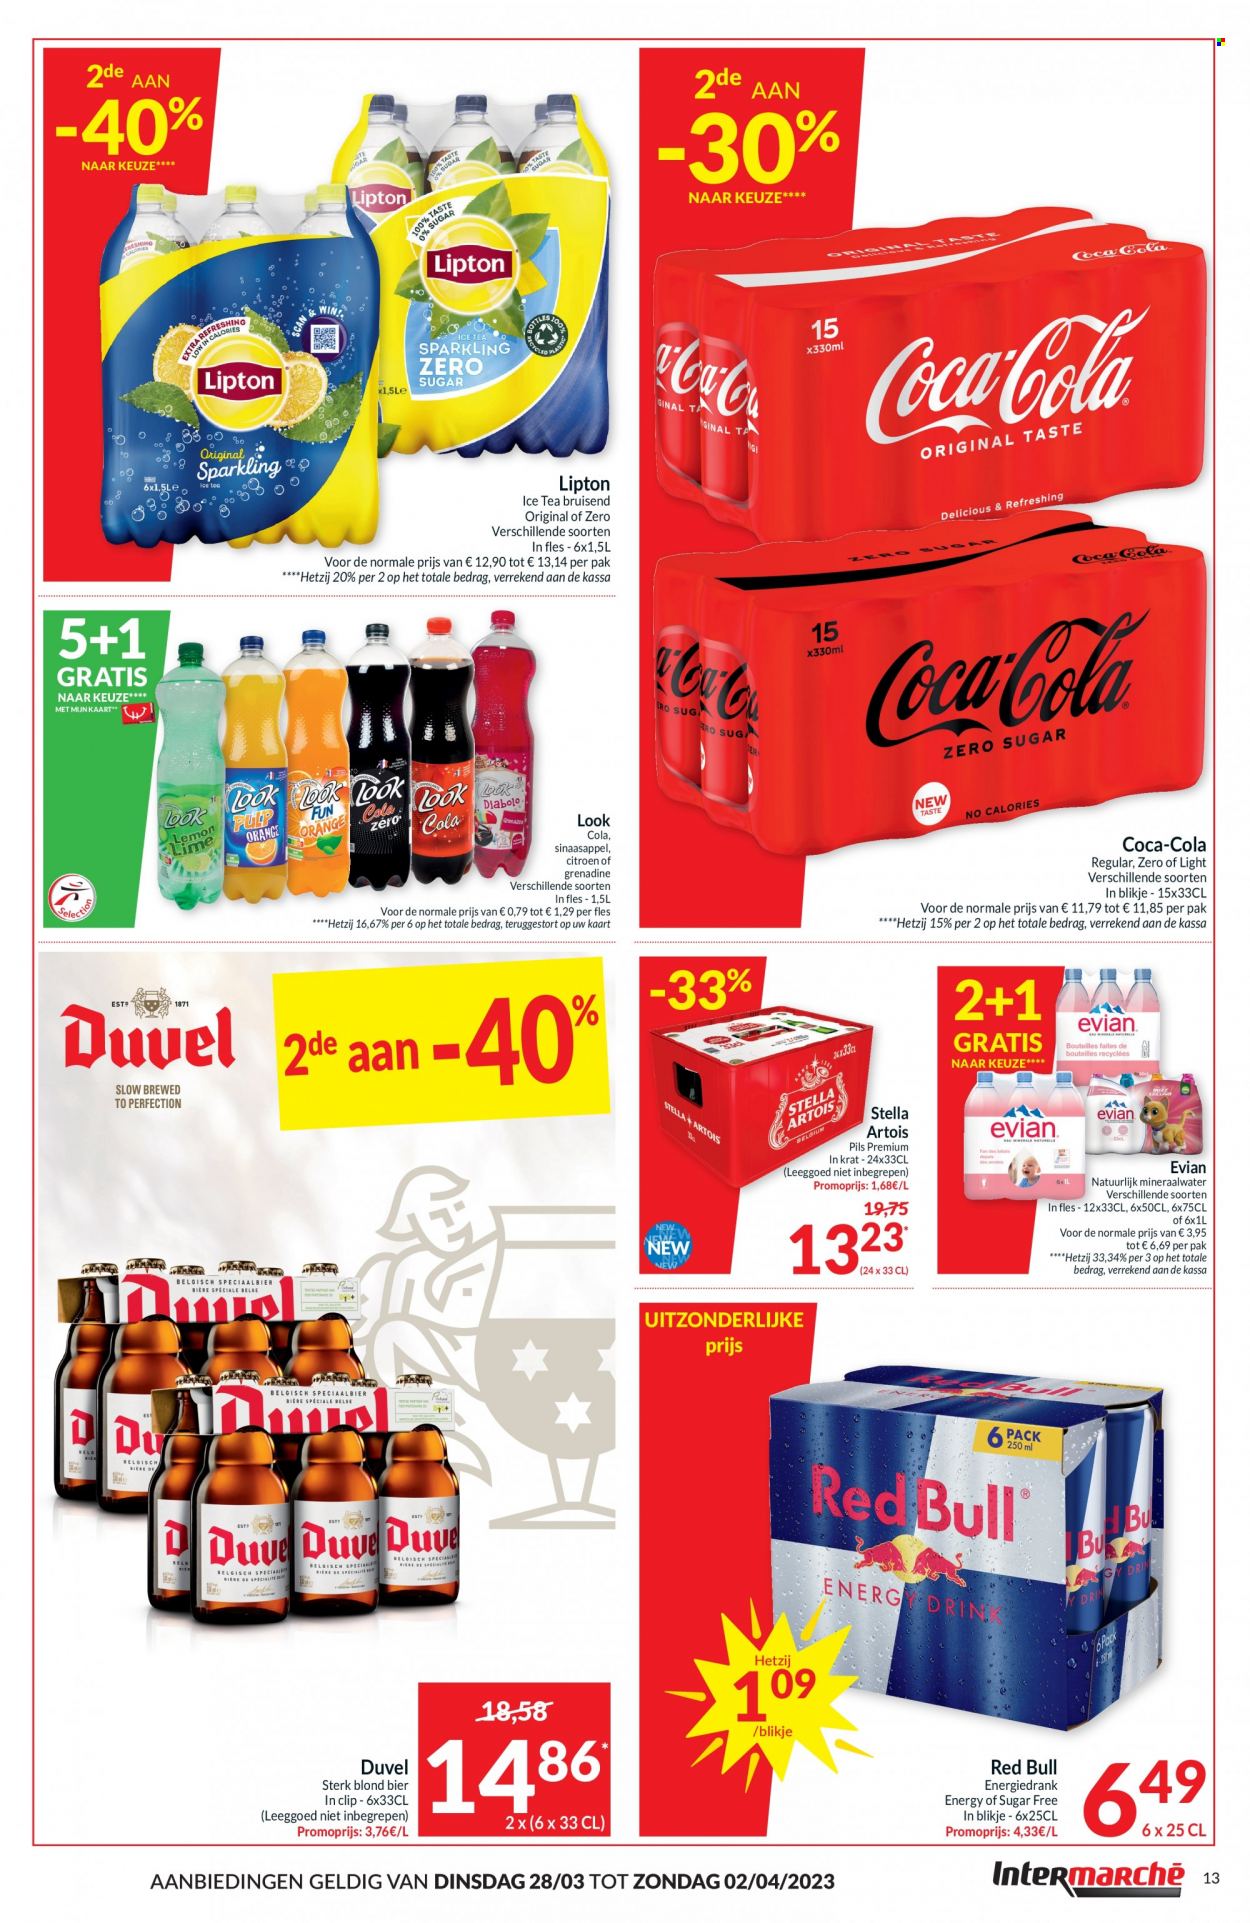 thumbnail - Intermarché-aanbieding - 28/03/2023 - 02/04/2023 -  producten in de aanbieding - Stella Artois, Duvel, bier, sinaasappels, Red Bull, Coca-Cola, Lipton, mineraalwater, Evian, ice tea, Lipton Ice Tea, thee, Grenadine. Pagina 13.